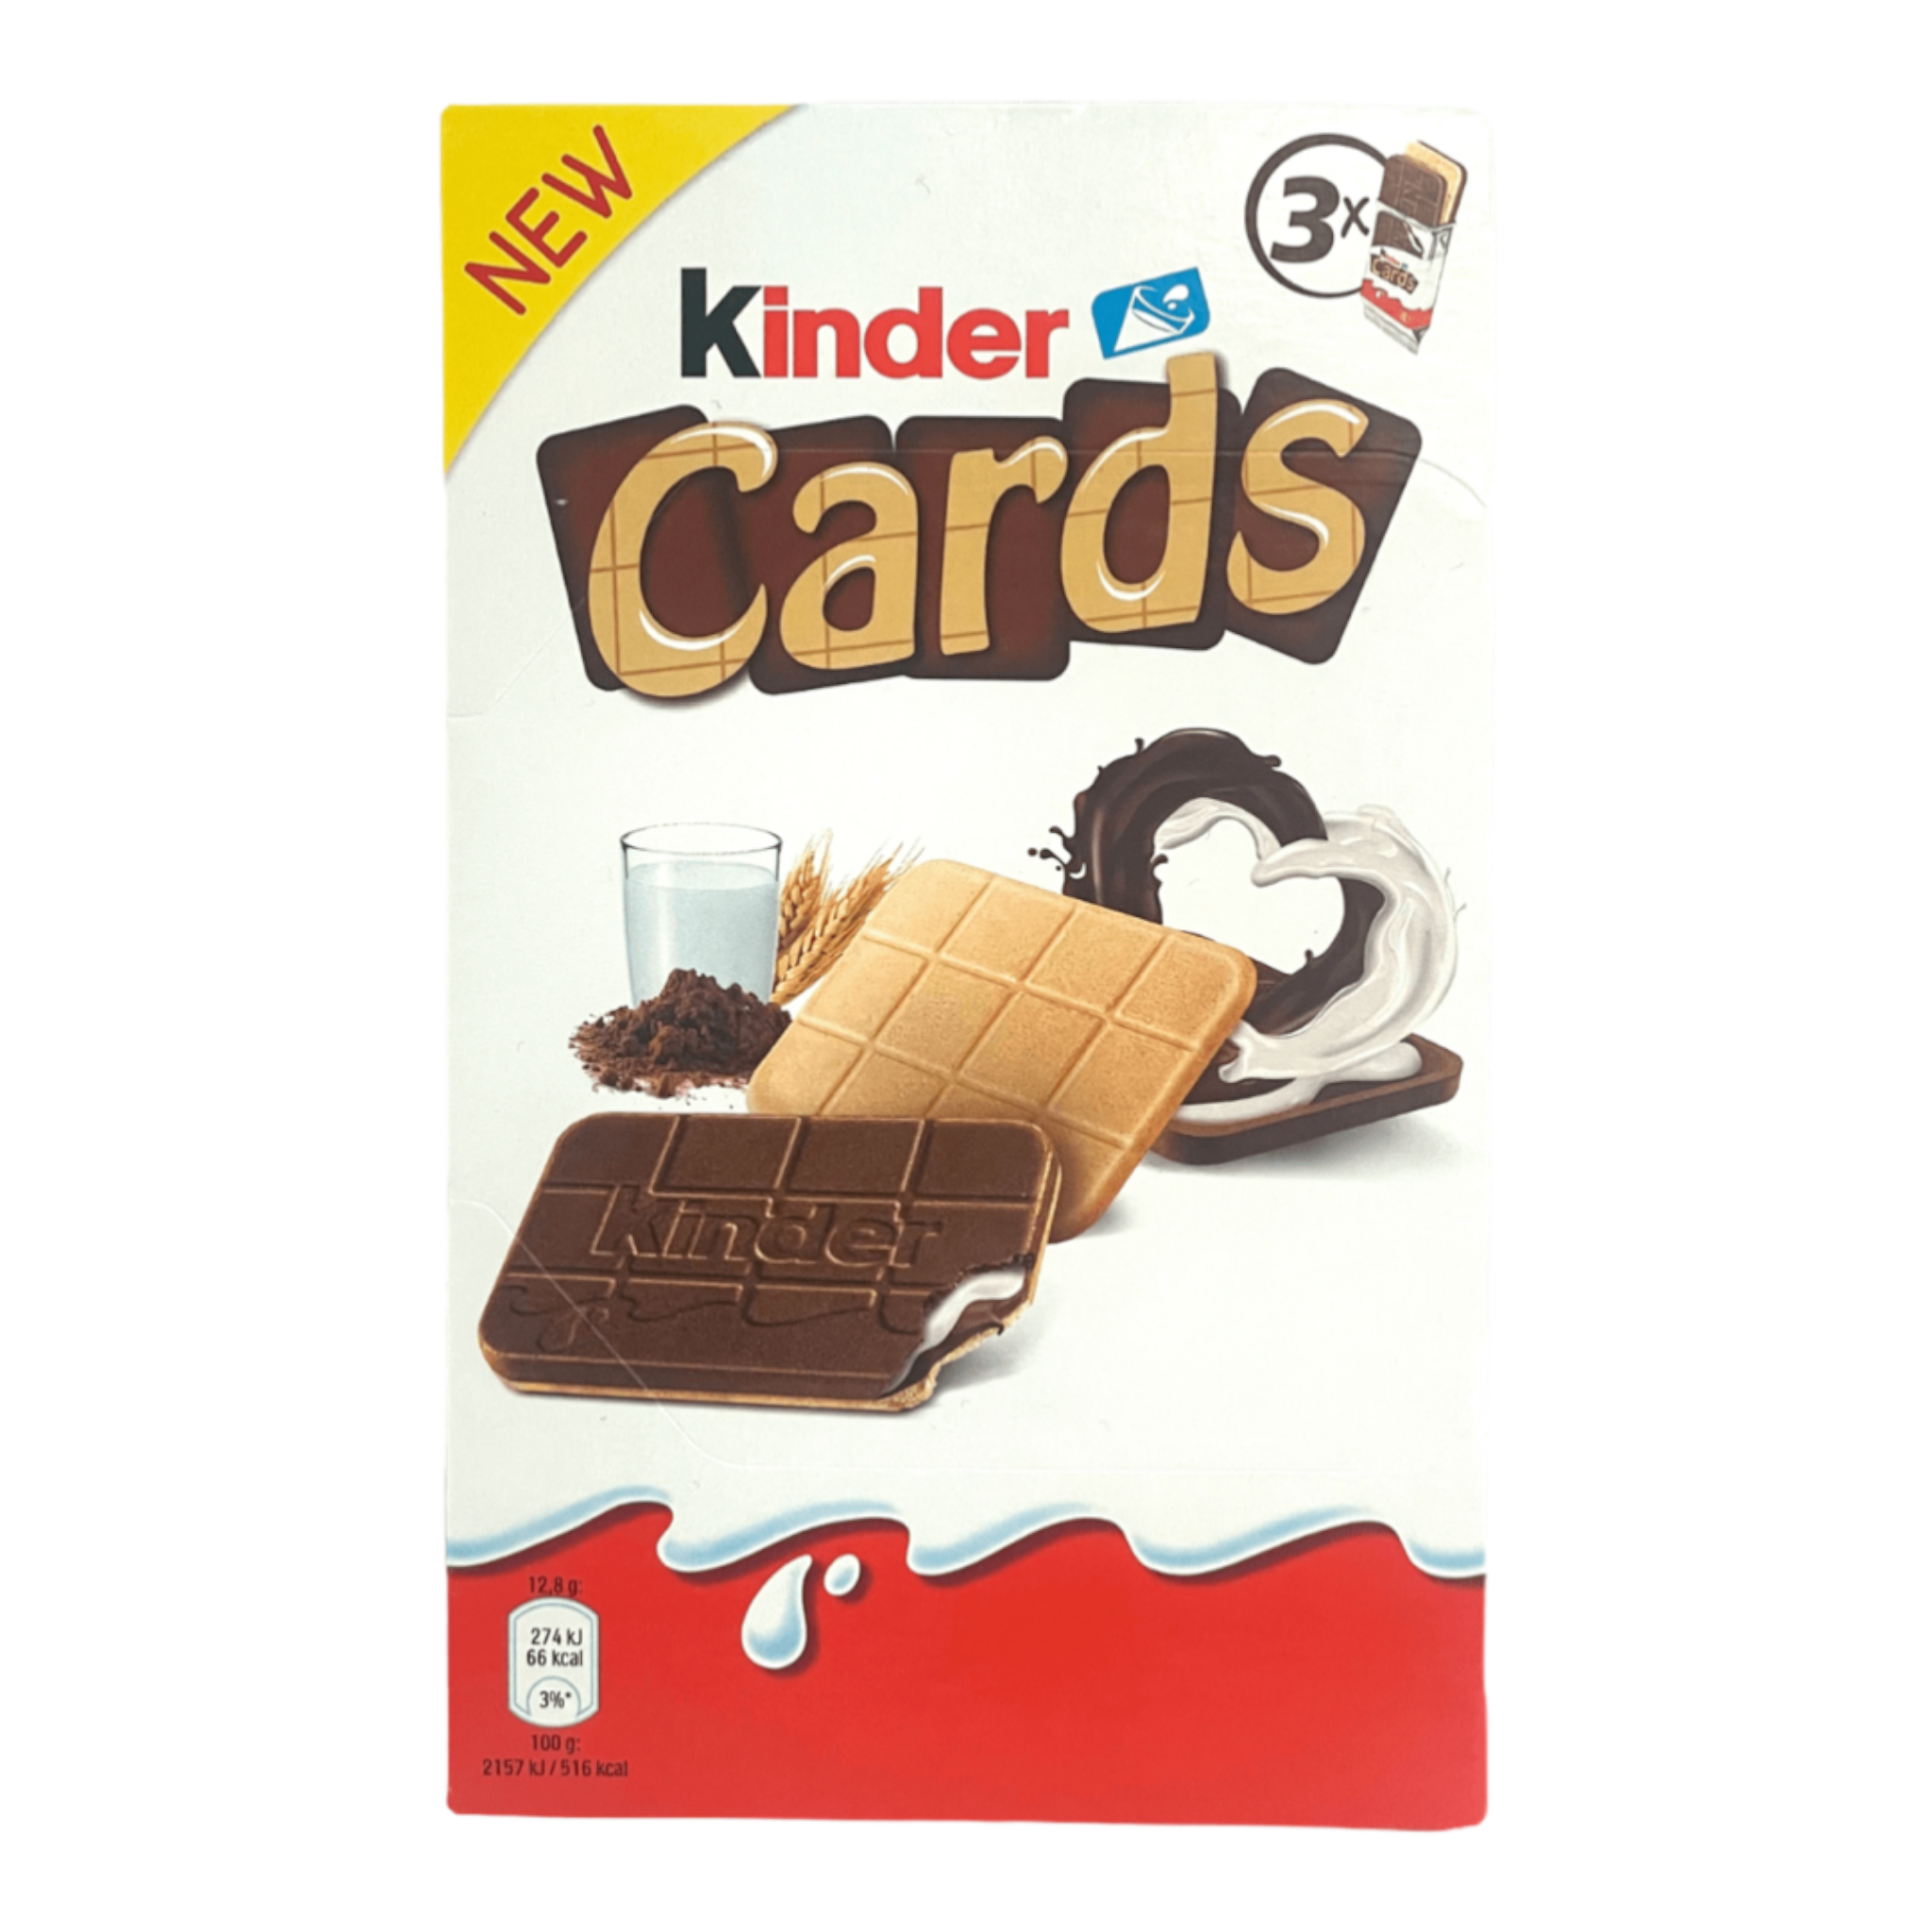 Kinder Cards 128g – Patak Meats